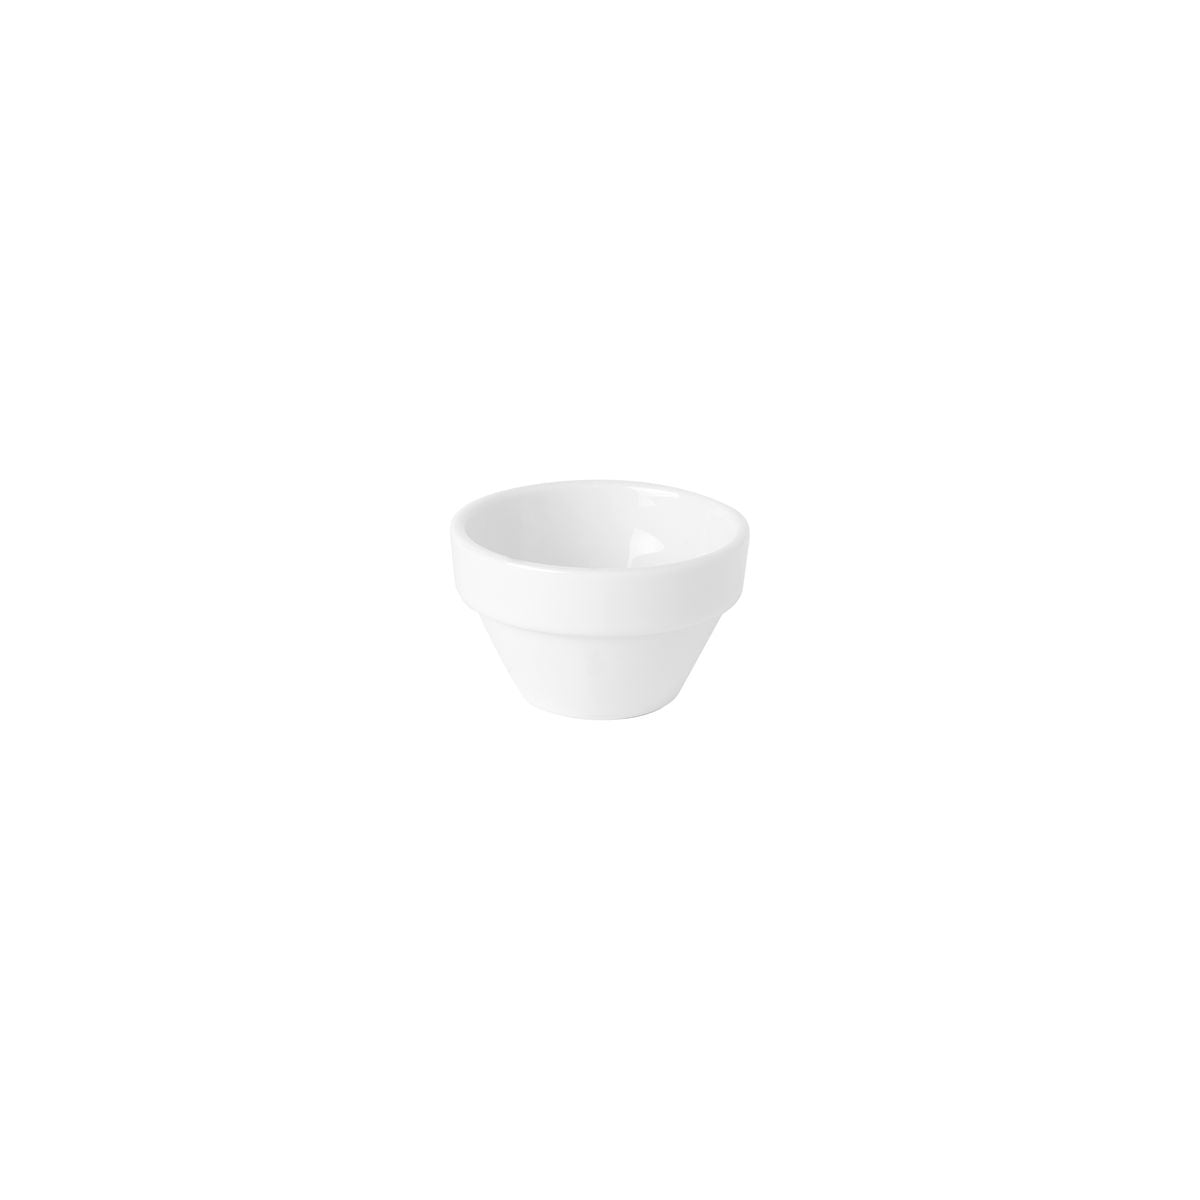 94398 Royal Porcelain Chelsea Butter Dish 55mm (0270) Tomkin Australia Hospitality Supplies